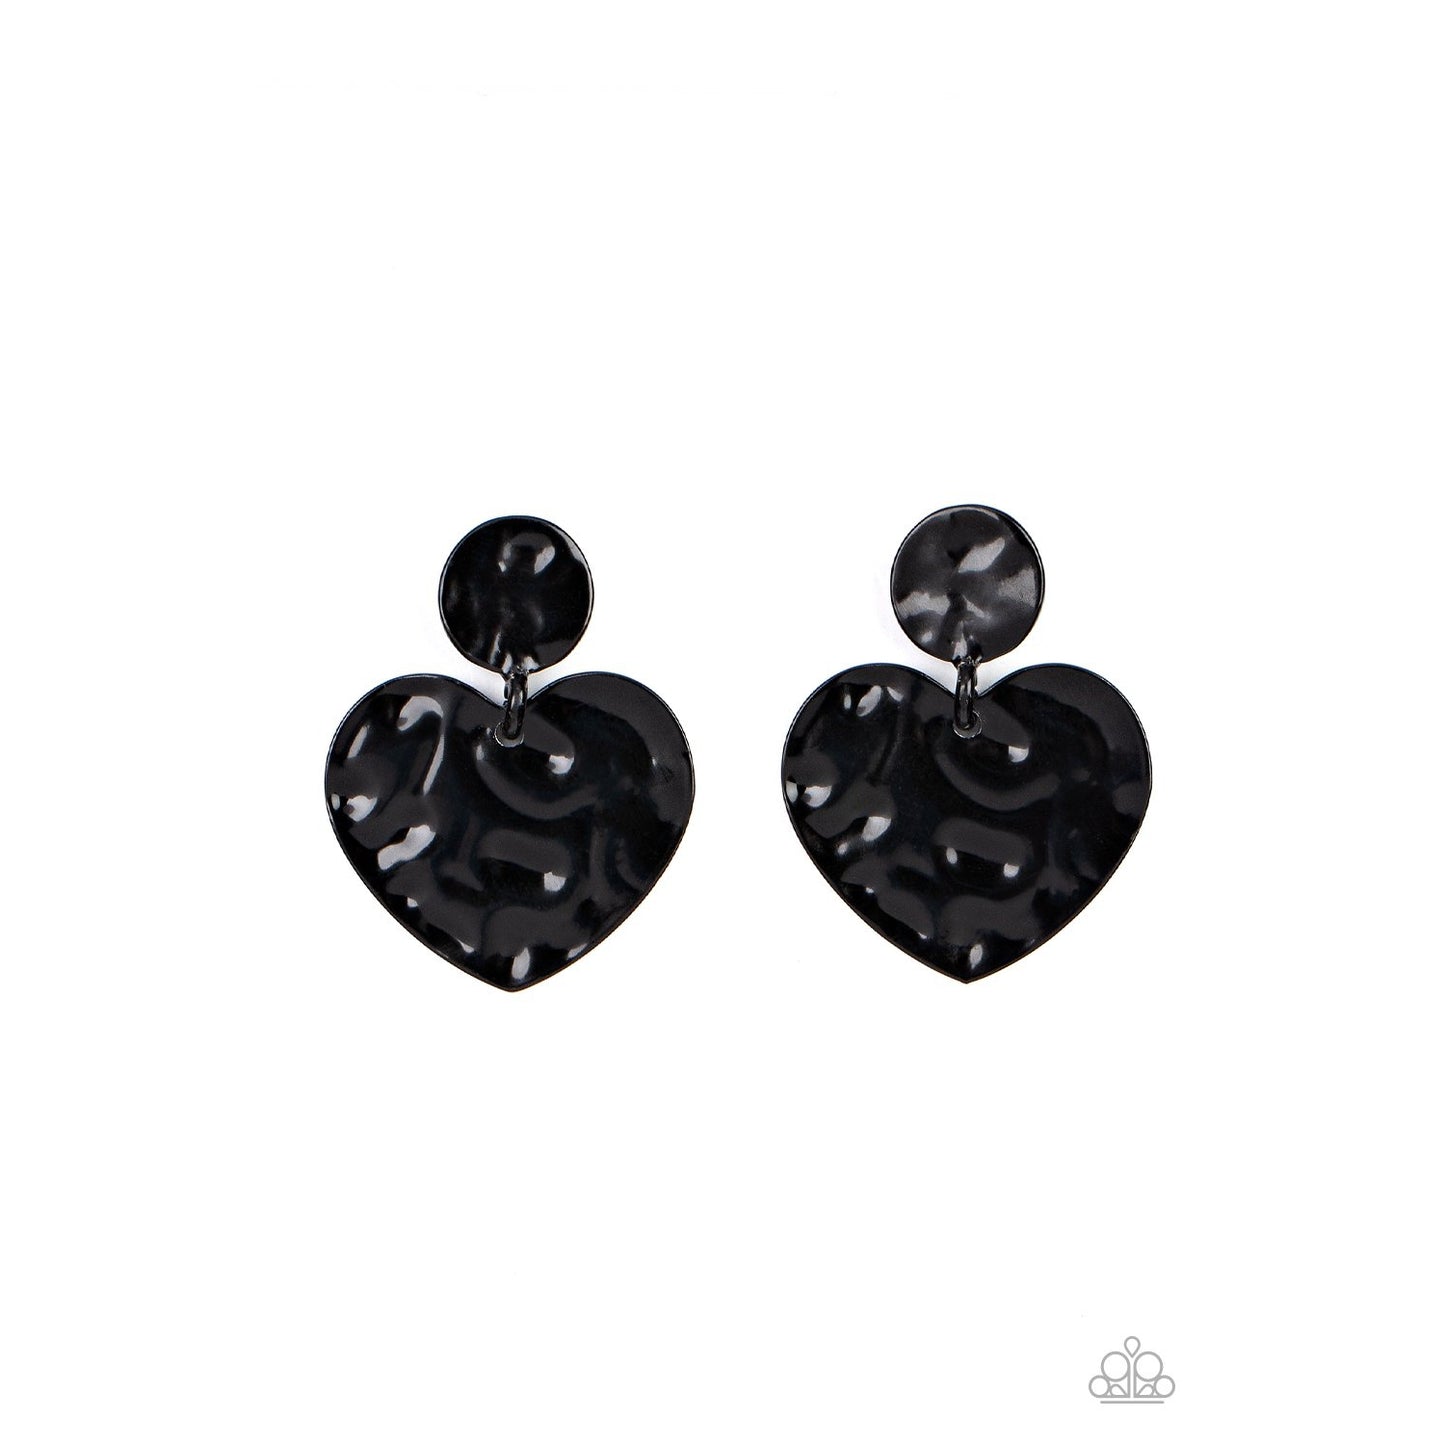 Just a Little Crush - Black Earrings - Paparazzi Accessories - GlaMarous Titi Jewels